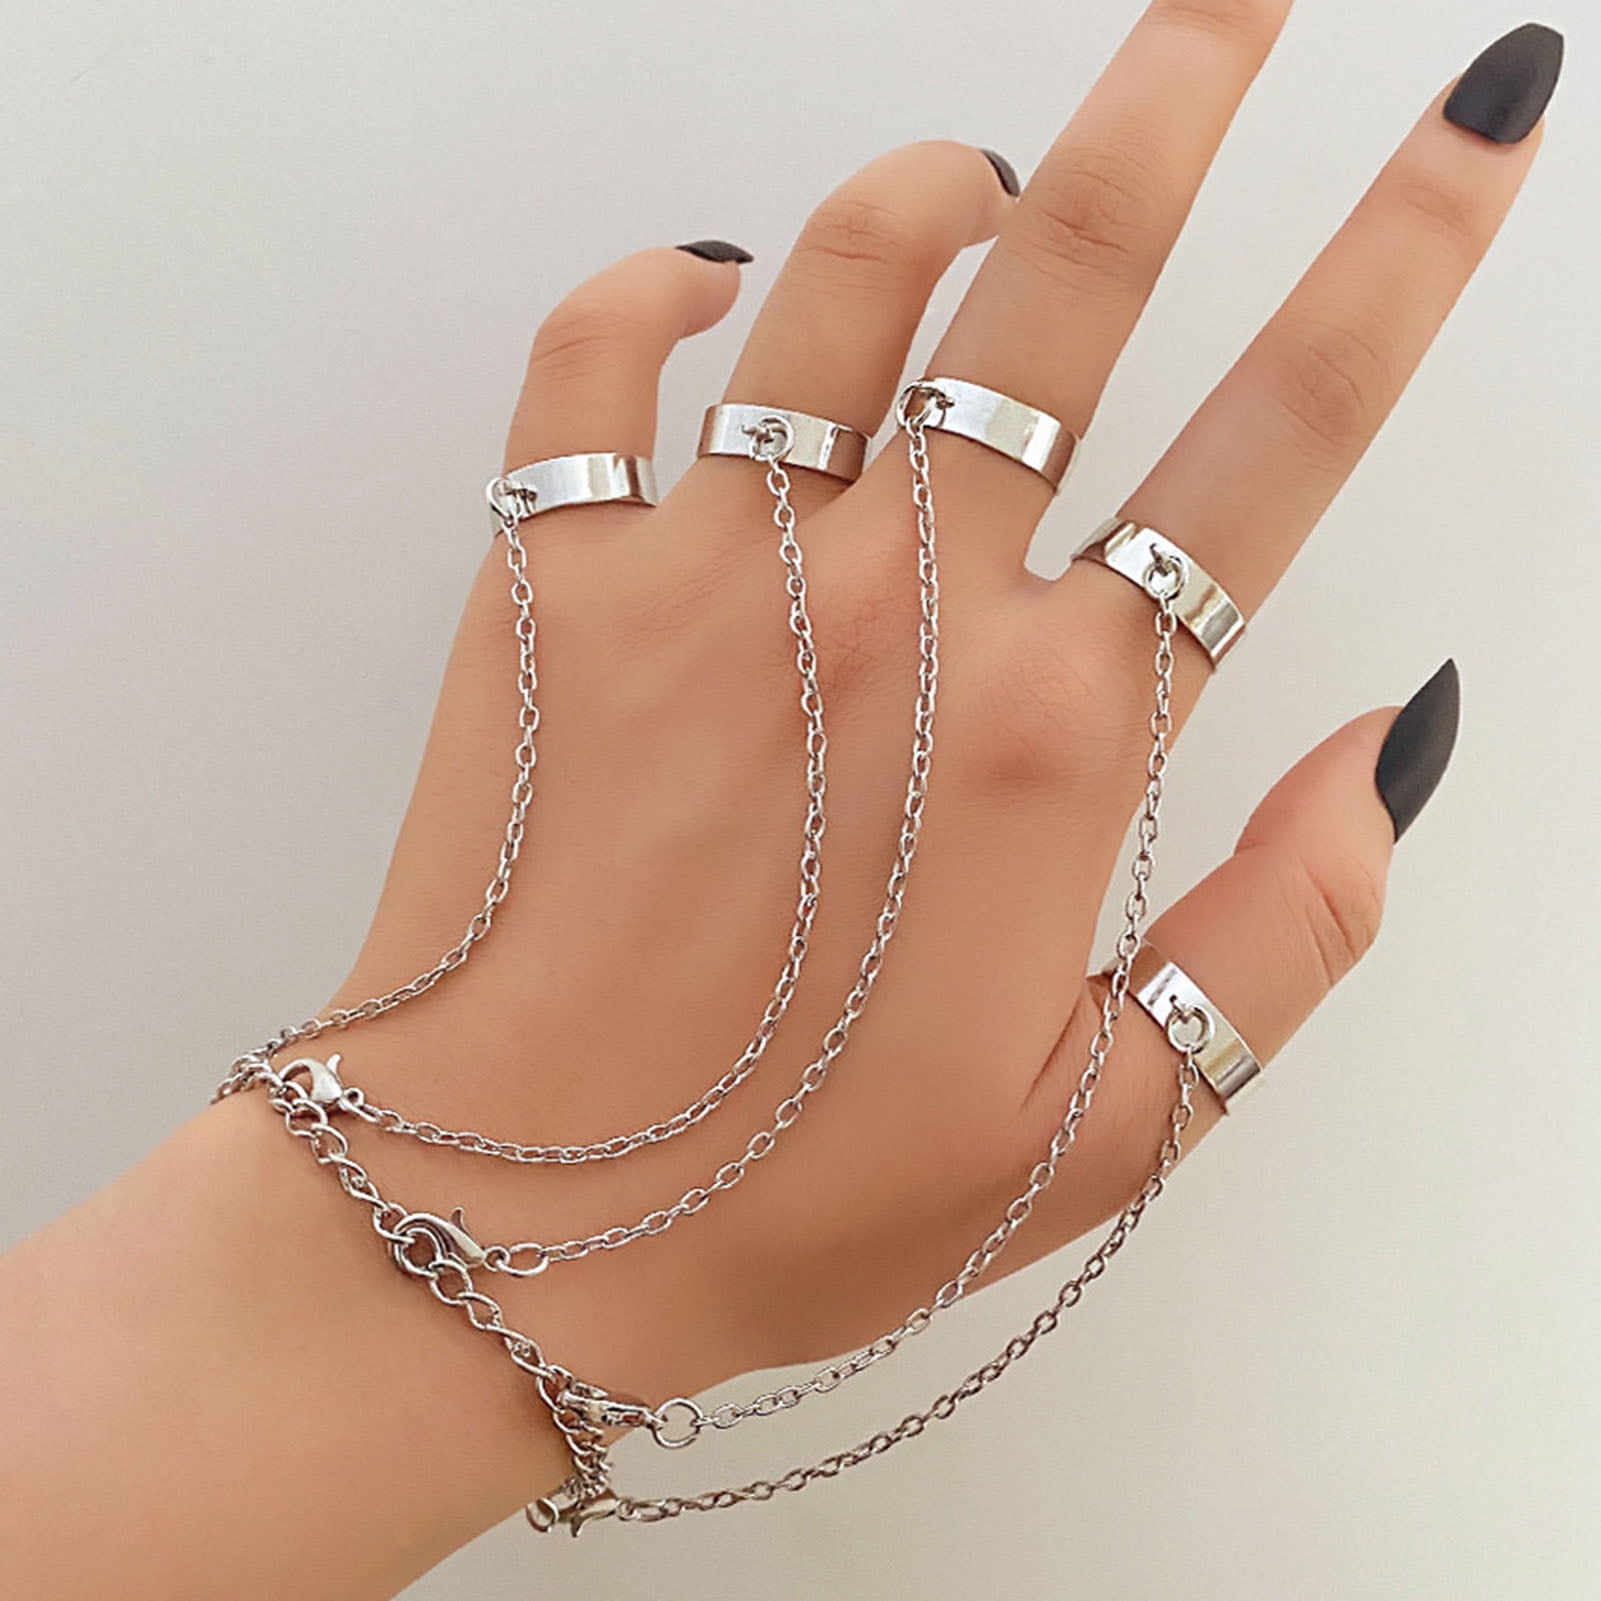 Slave Bracelet Ring 925 Silver Handchain with Gemstone | JFW – J F W